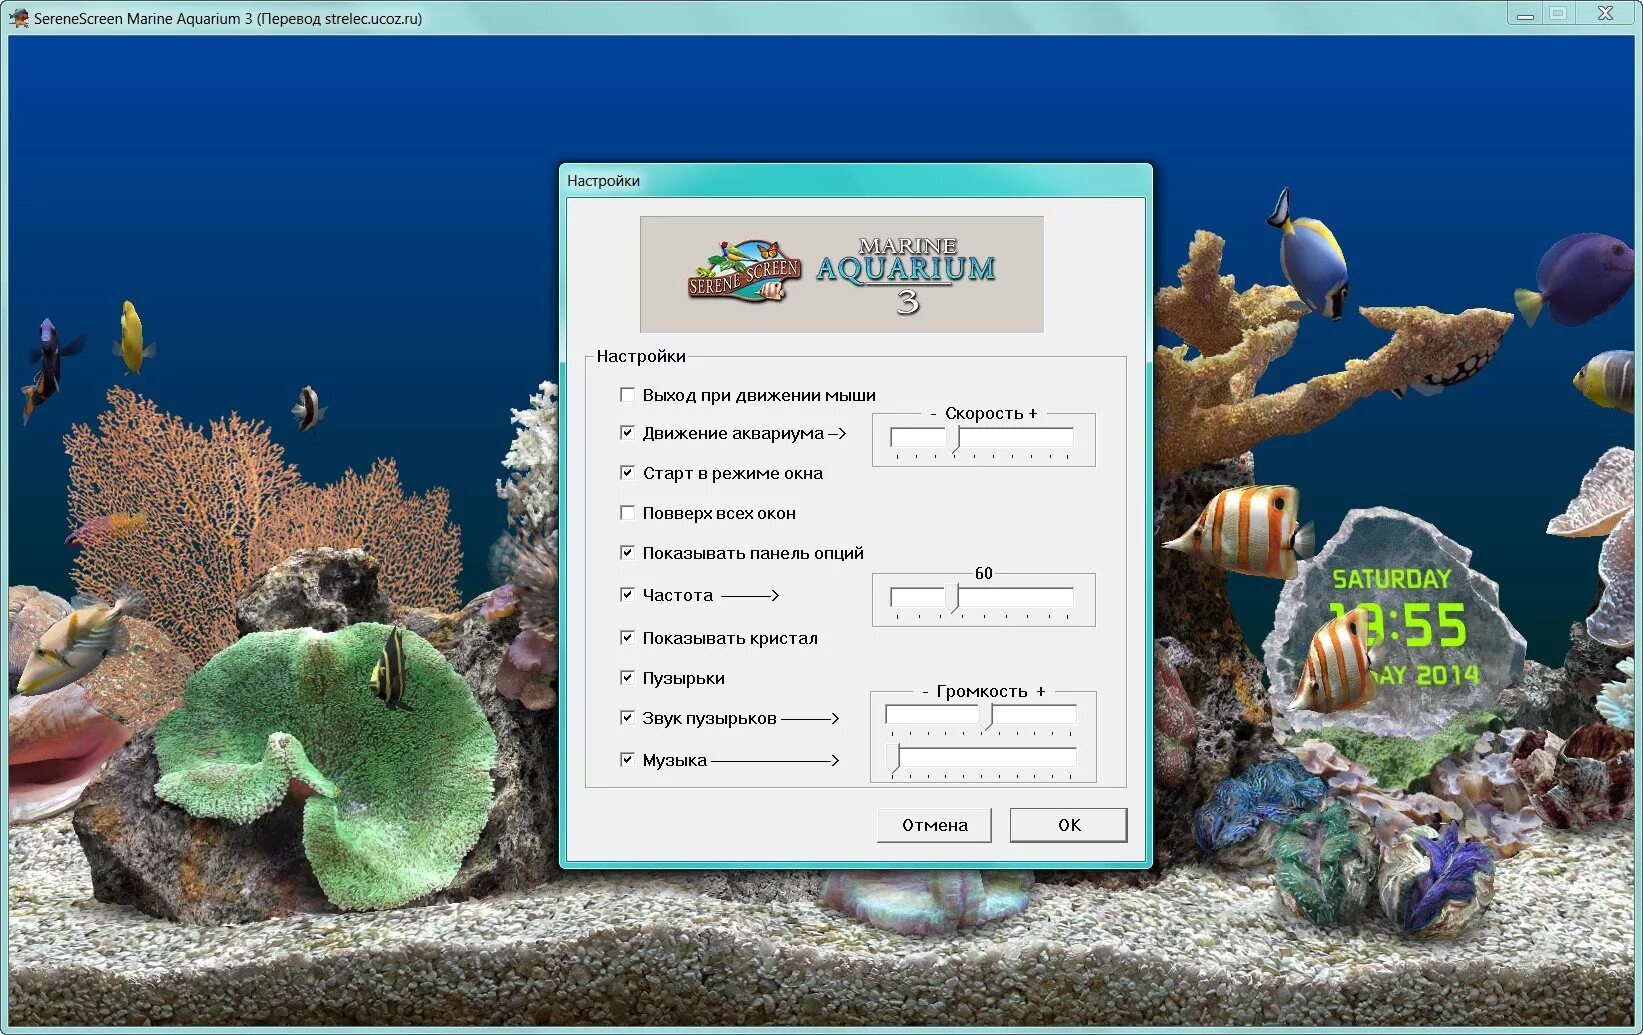 Aqua перевод на русский. Заставка Marine Aquarium 3. Программа для аквариума. Marine Aquarium Screensaver. SERENESCREEN Marine Aquarium.